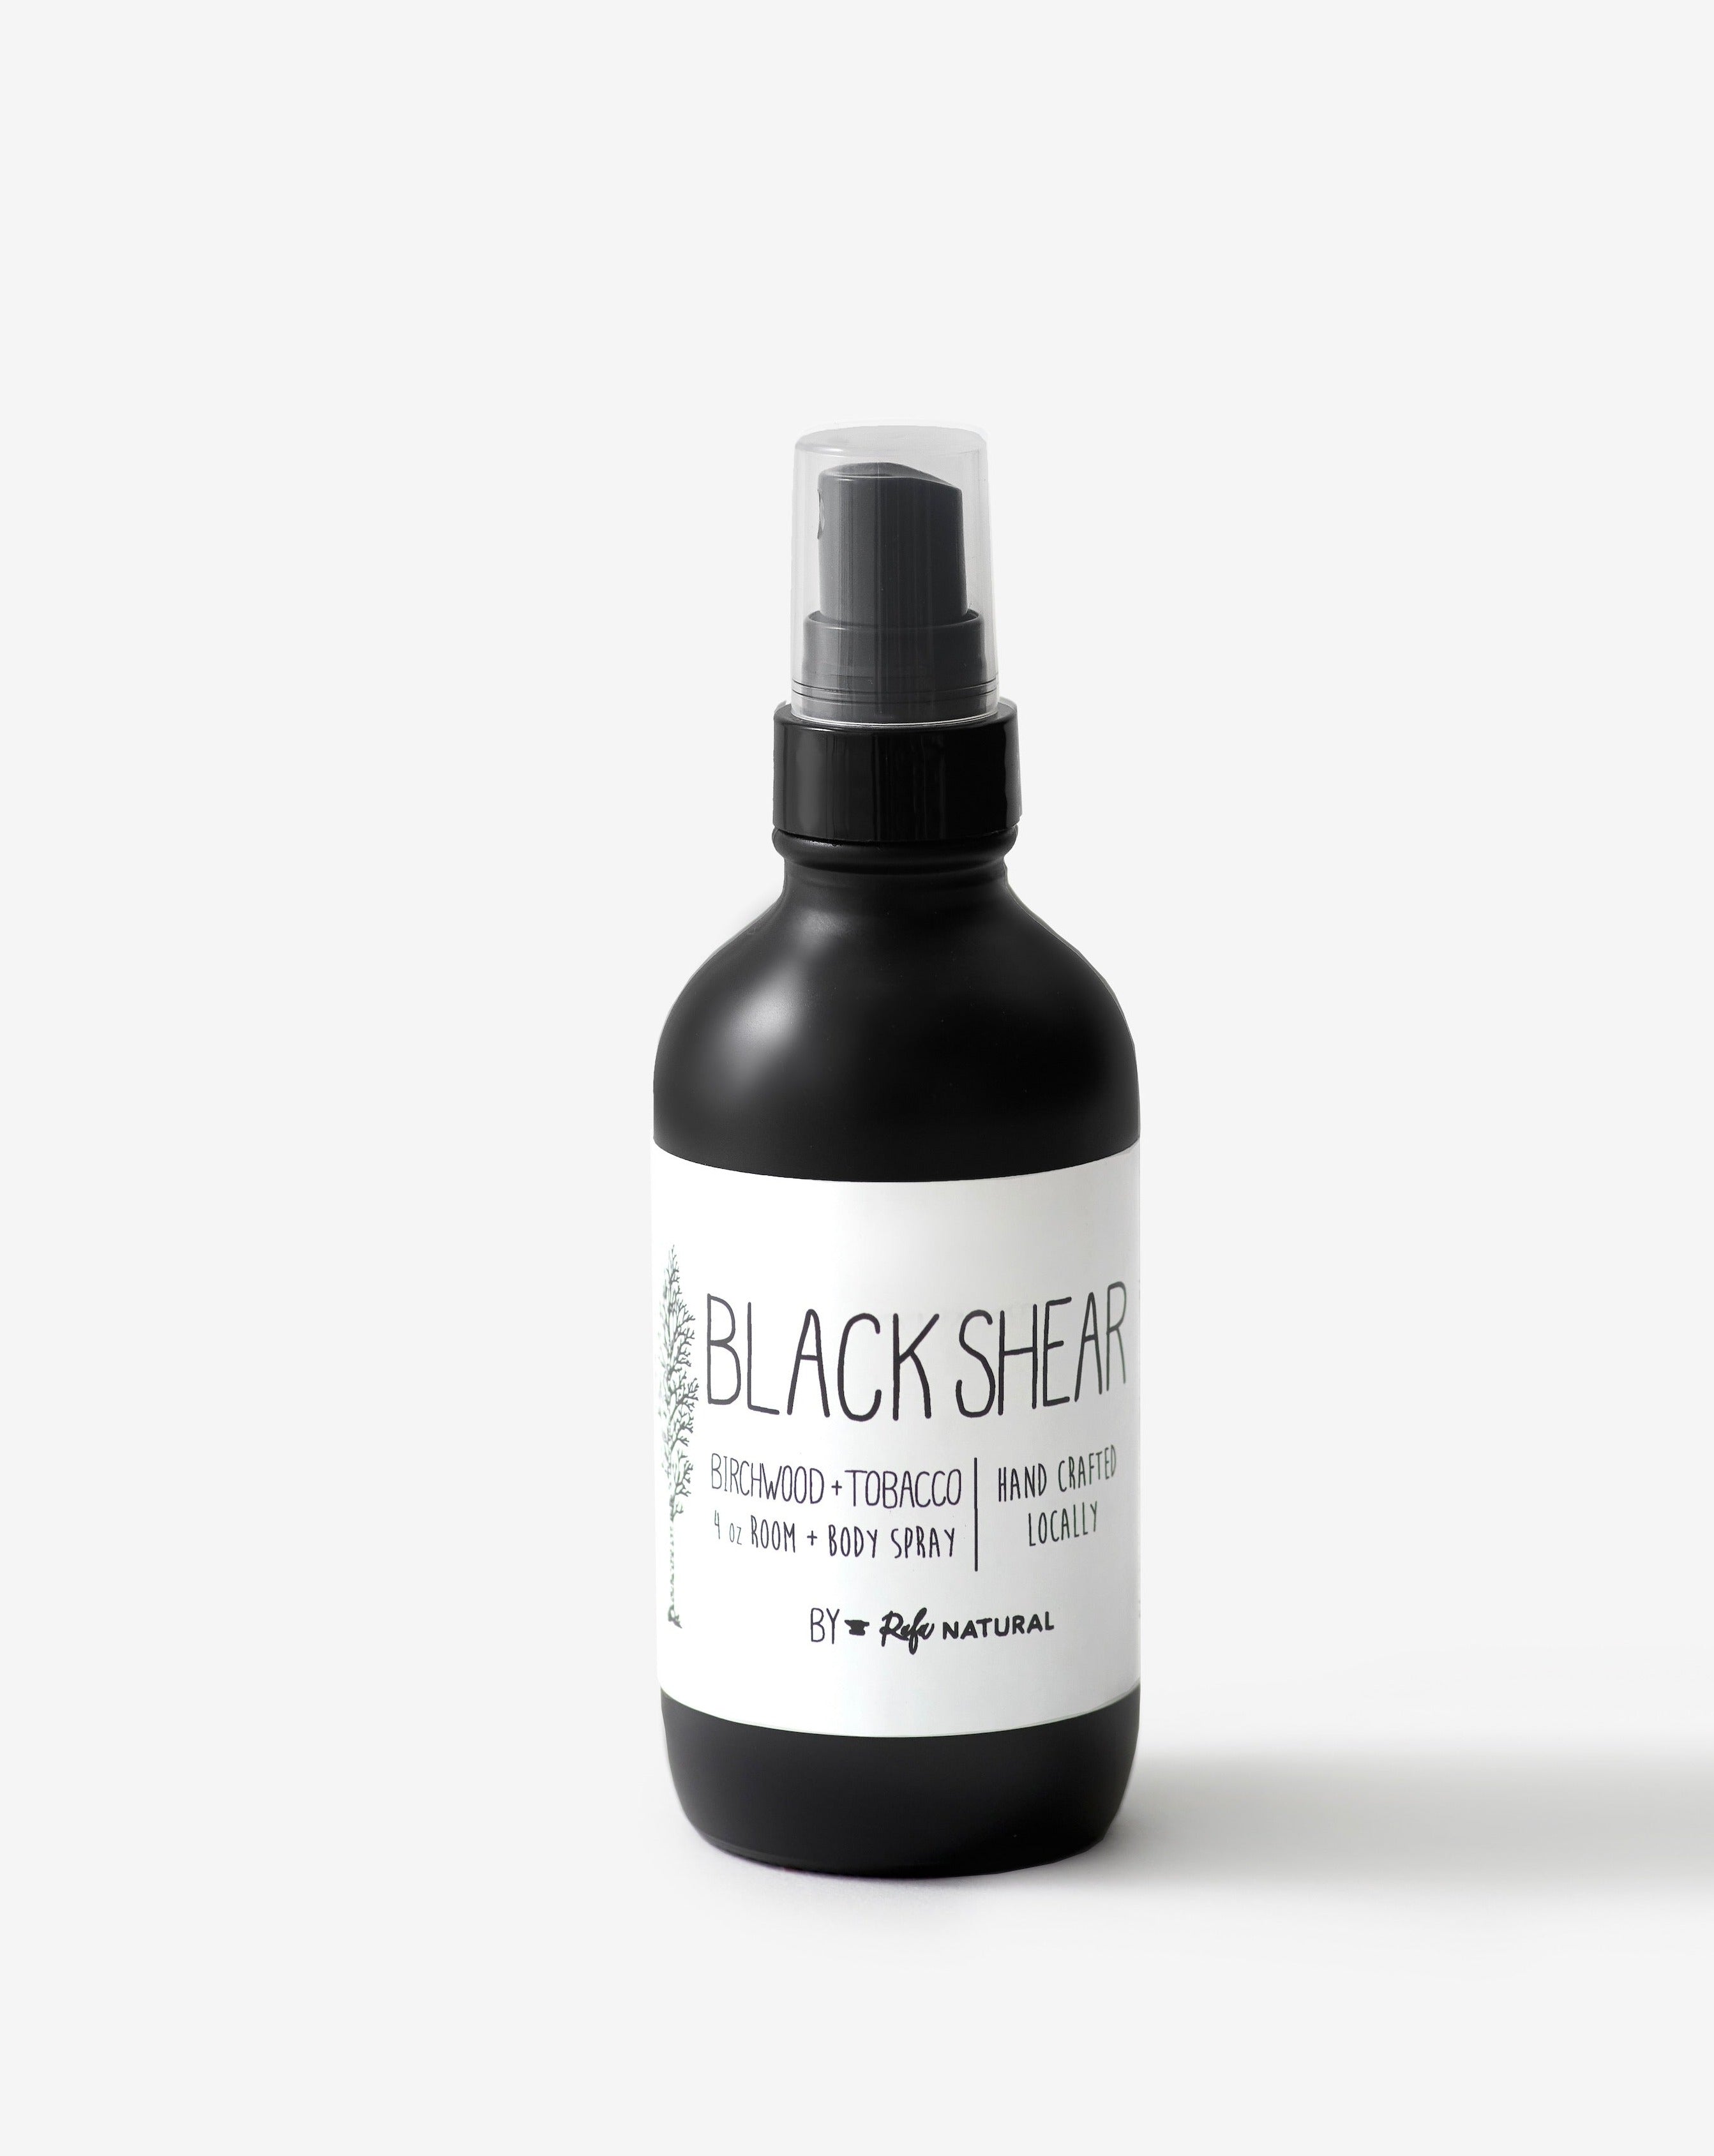 Blackshear Room and Body Spray by Rafa Natural